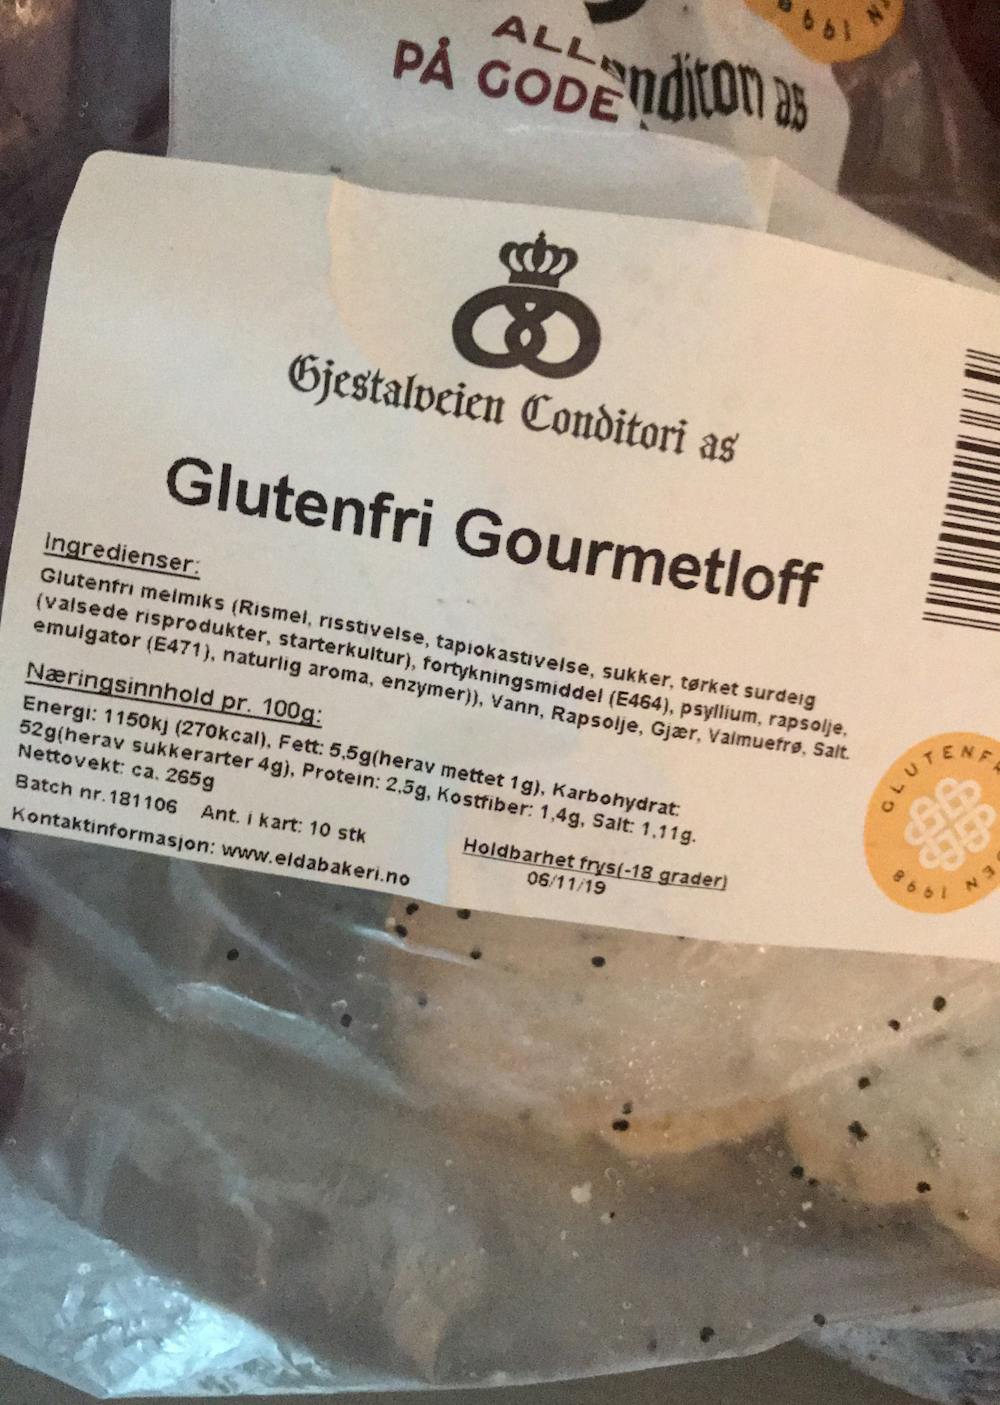 Ingredienslisten til Gjestalveien conditori AS Glutenfri gourmetloff